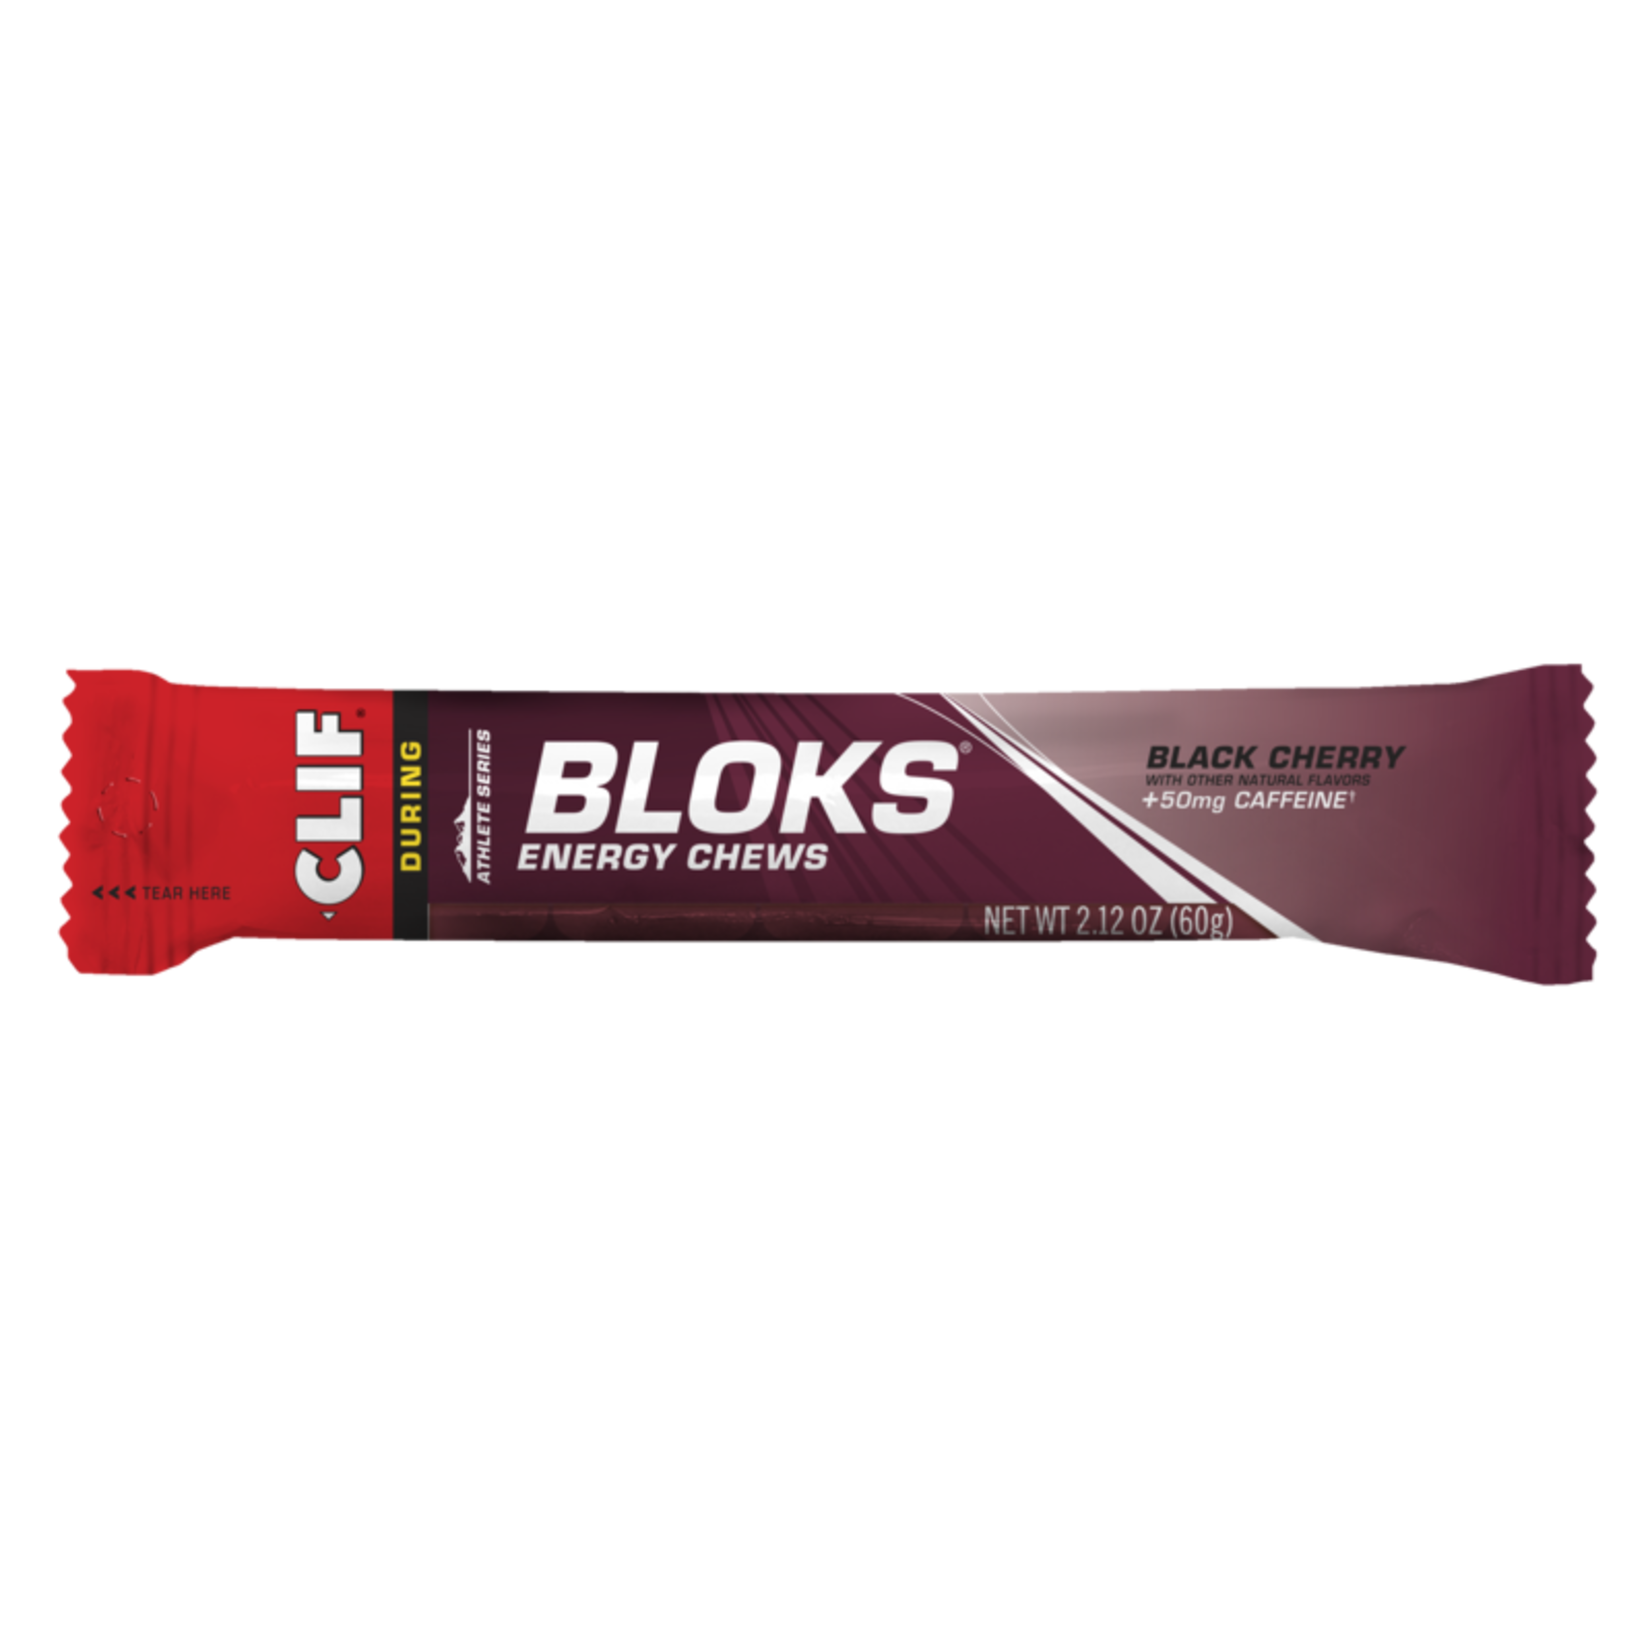 Clif Black Cherry + 50mg Caffeine Shot Bloks Energy Chews - Pack of 18